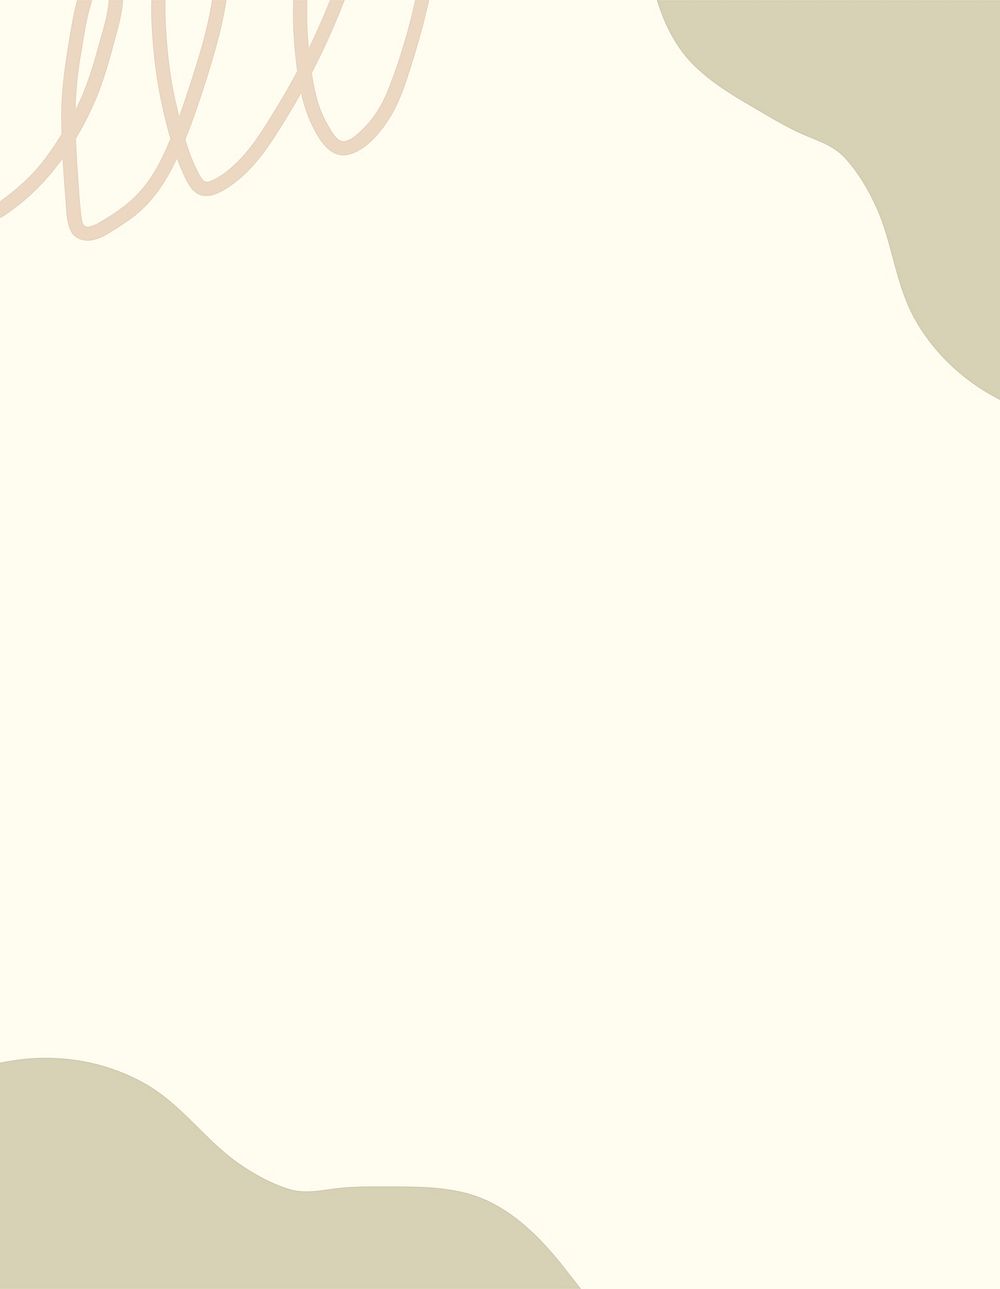 Aesthetic memphis border background, cute beige design